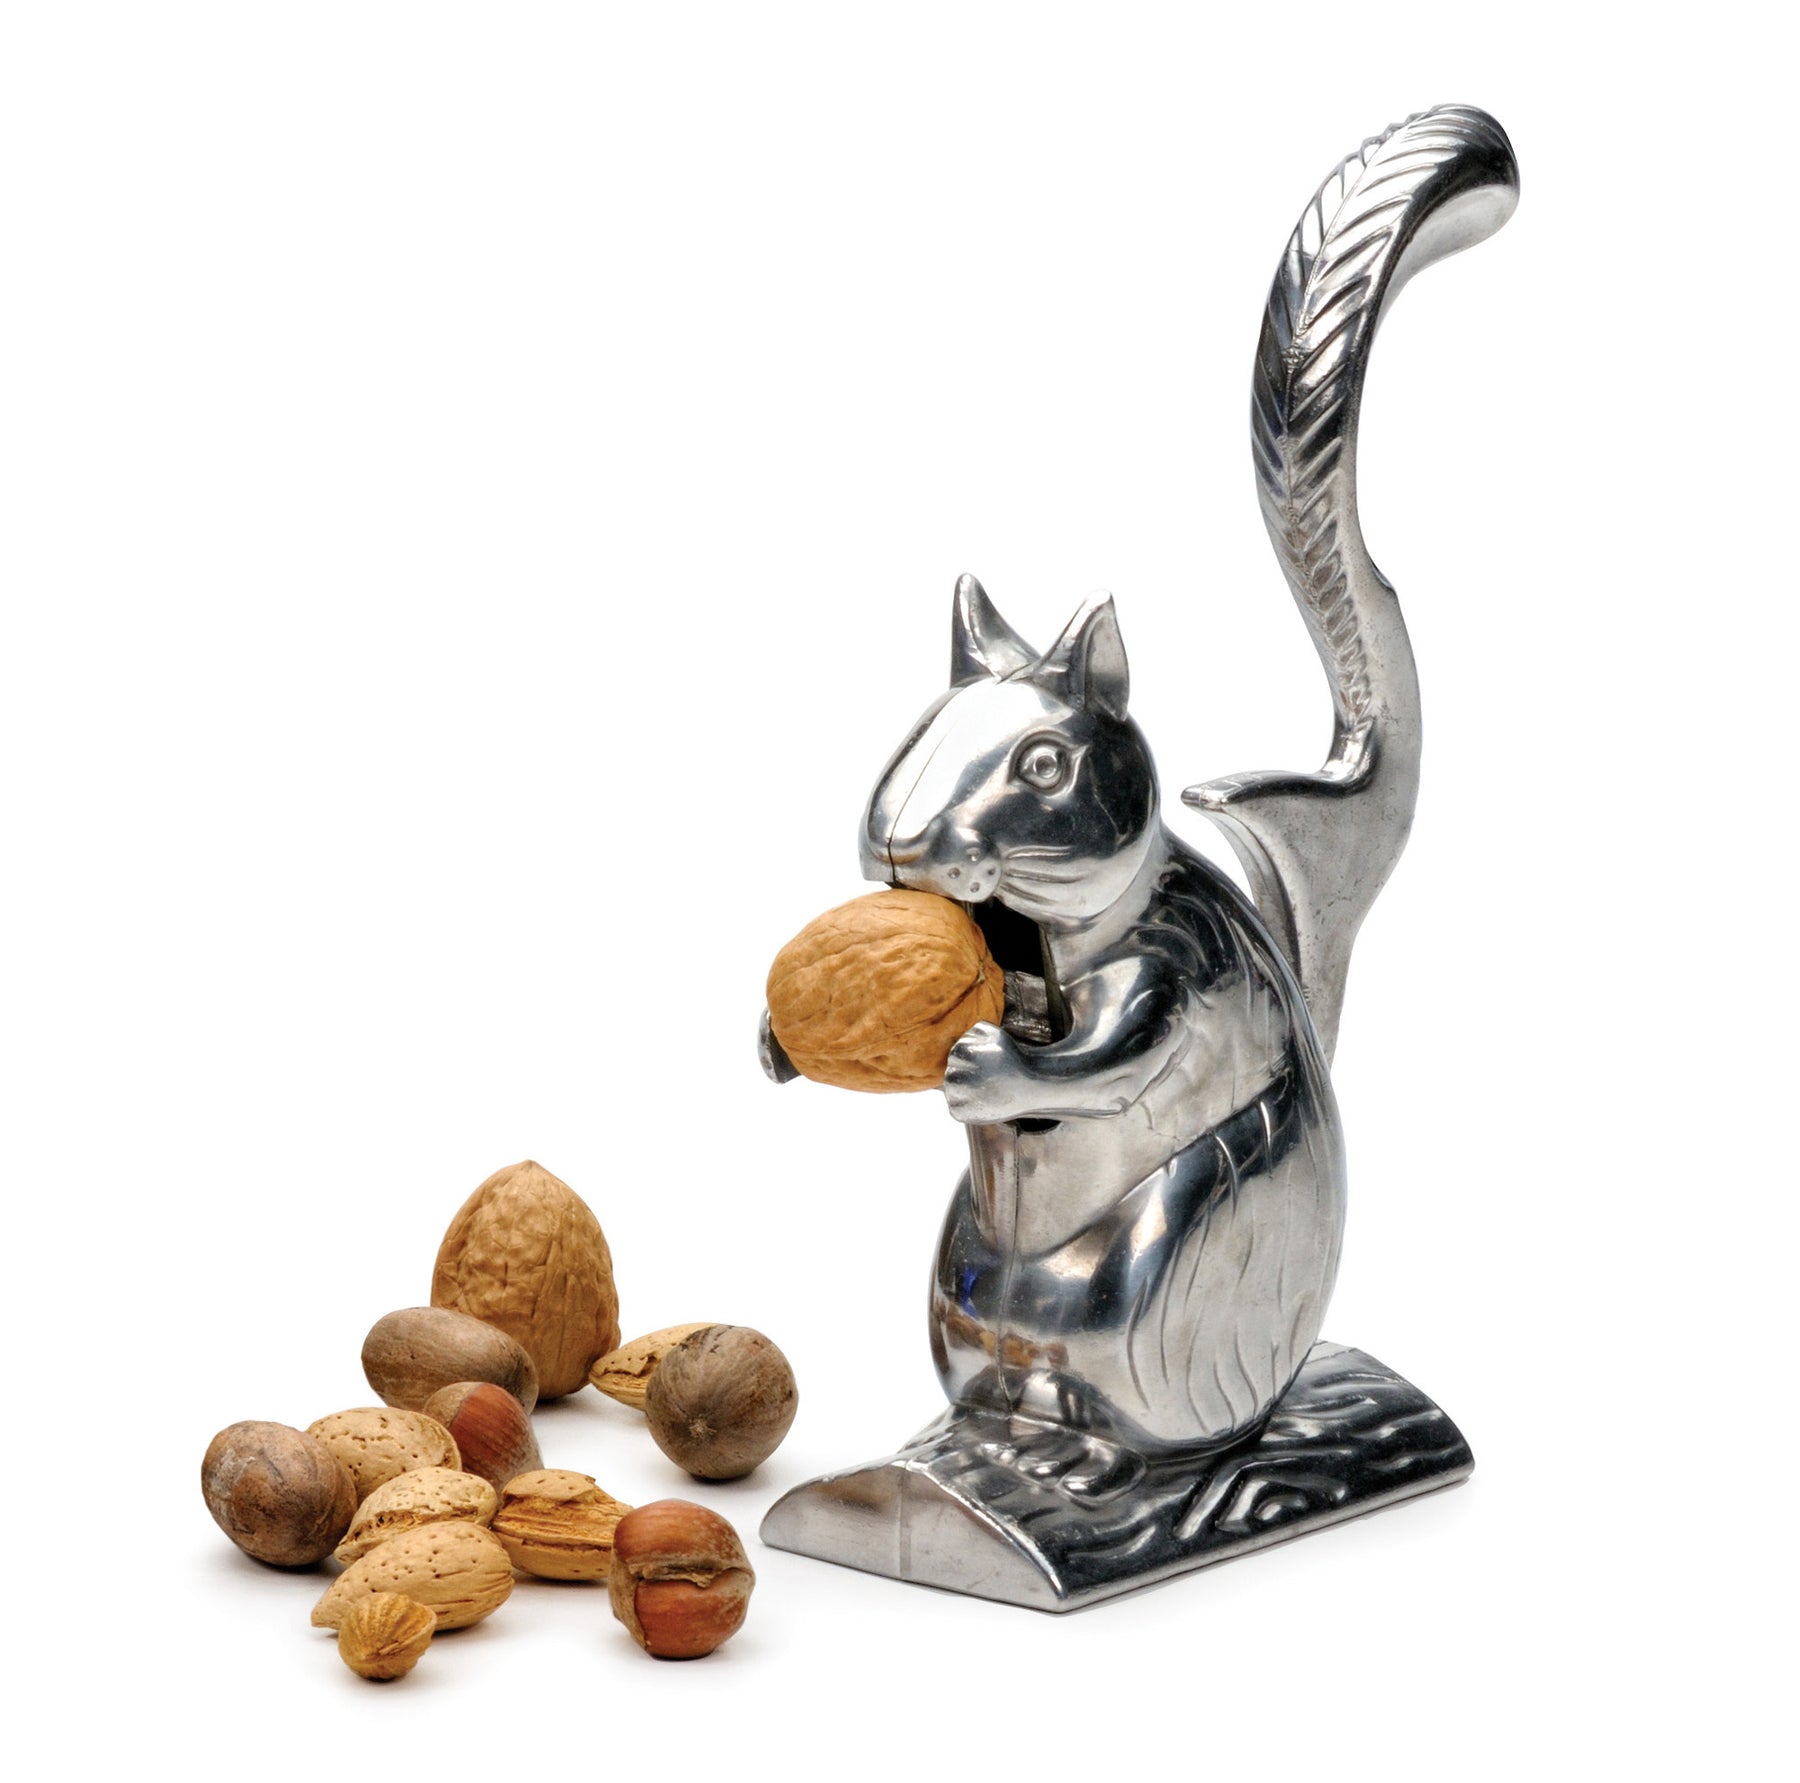 Pulverizing Squirrel Nut Grinders : squirrel nut grinder